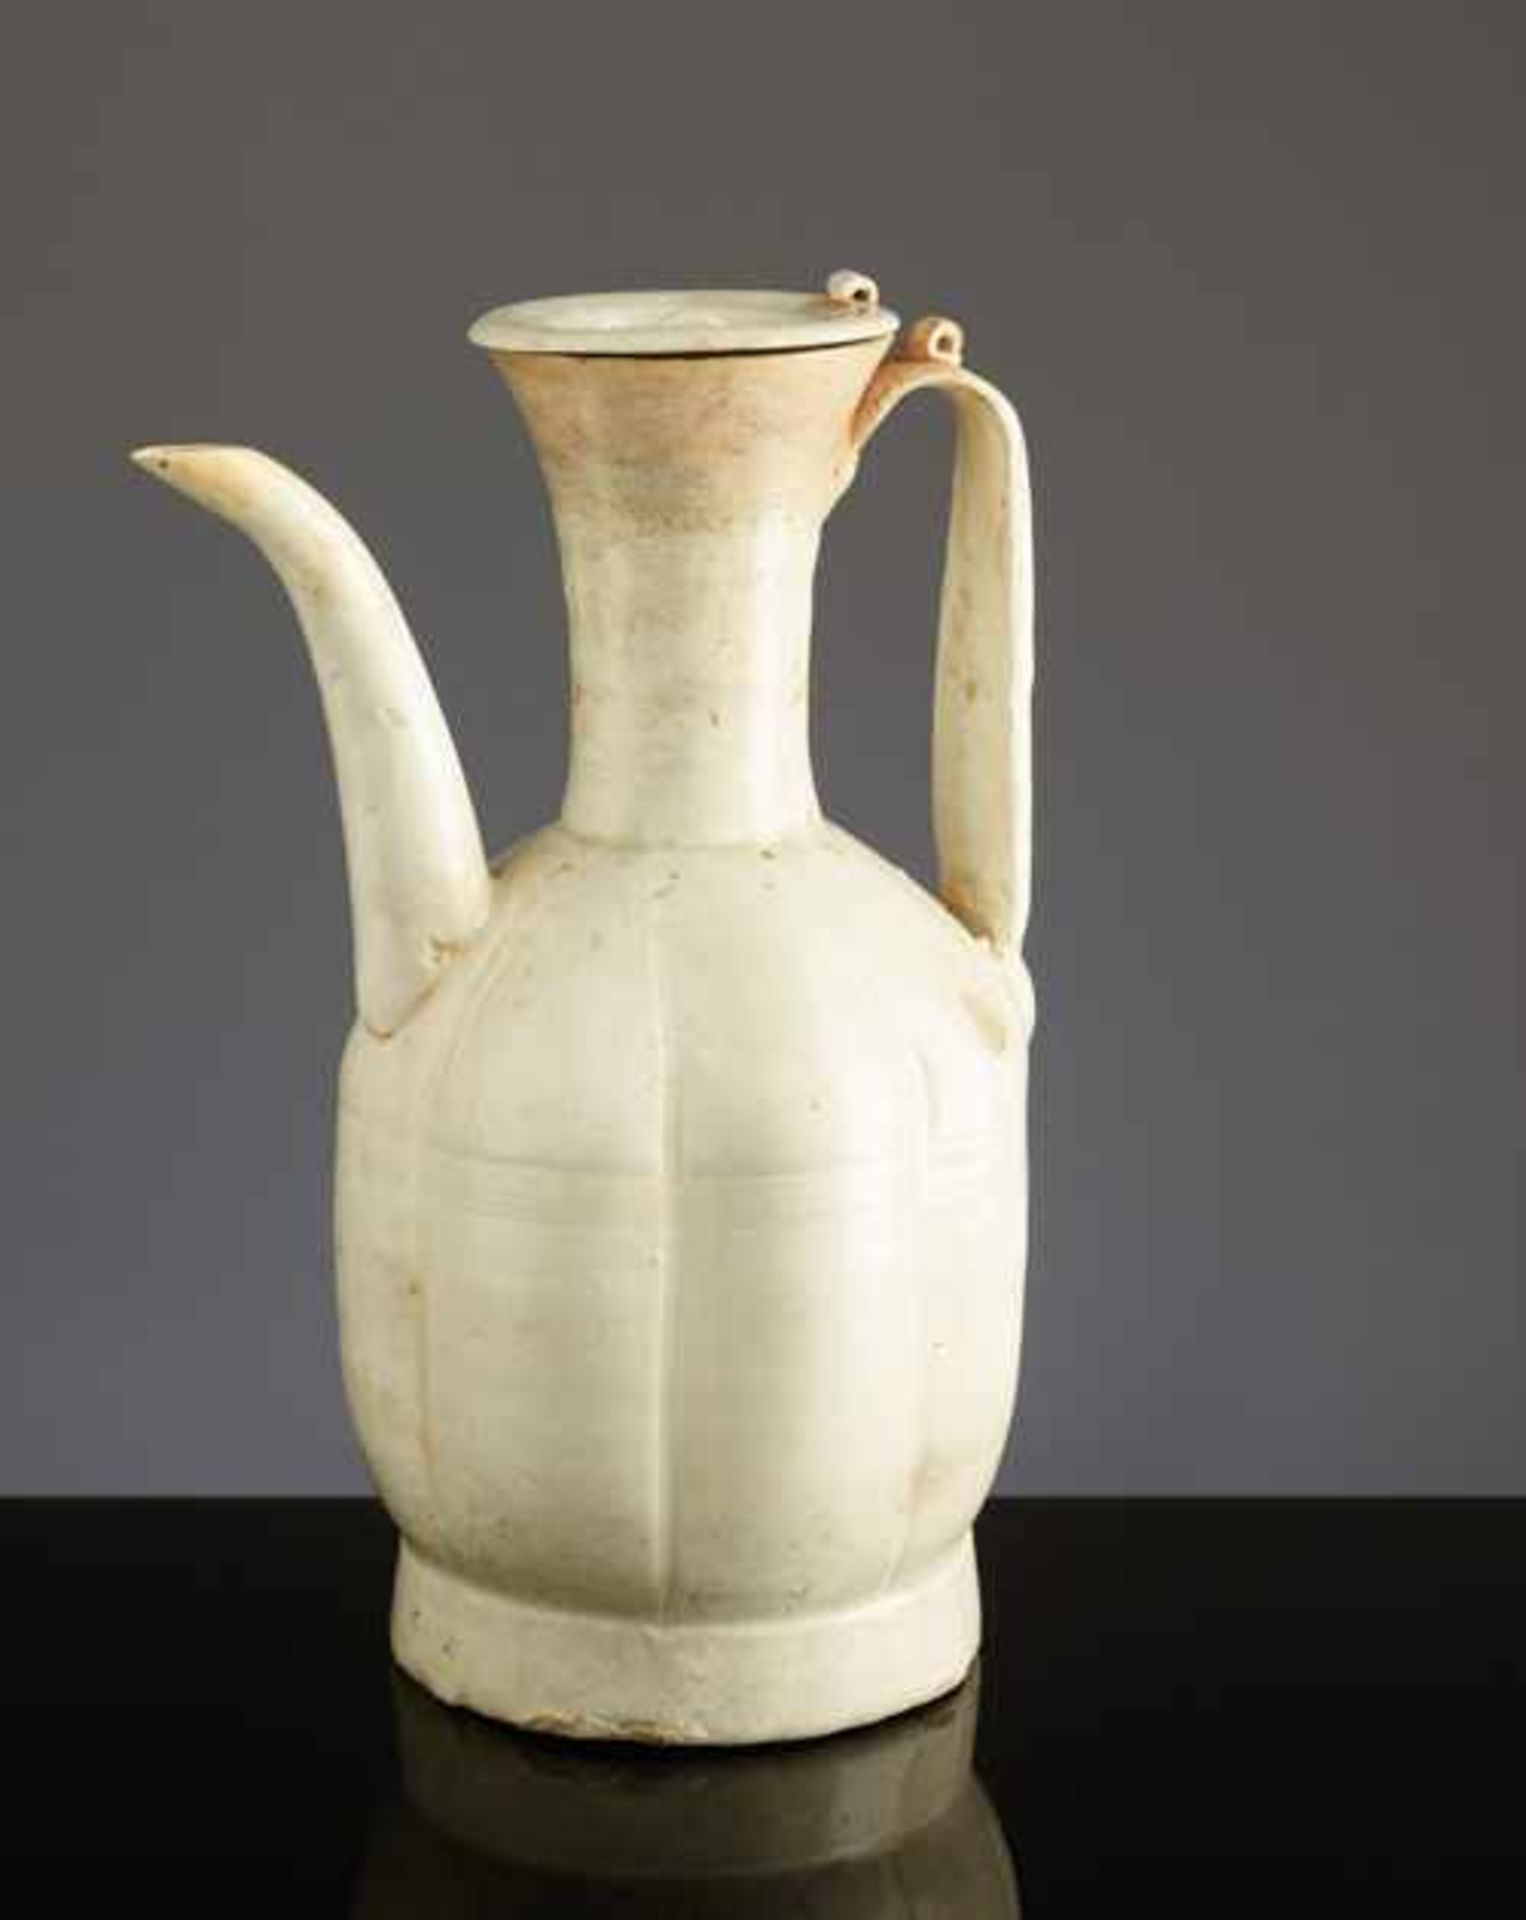 HENKELKANNE MIT AUSGUSS UND DECKELGlasierte Keramik. China, Song/Yuan, ca. 12. – 13. Jh. Elegante, - Image 2 of 7